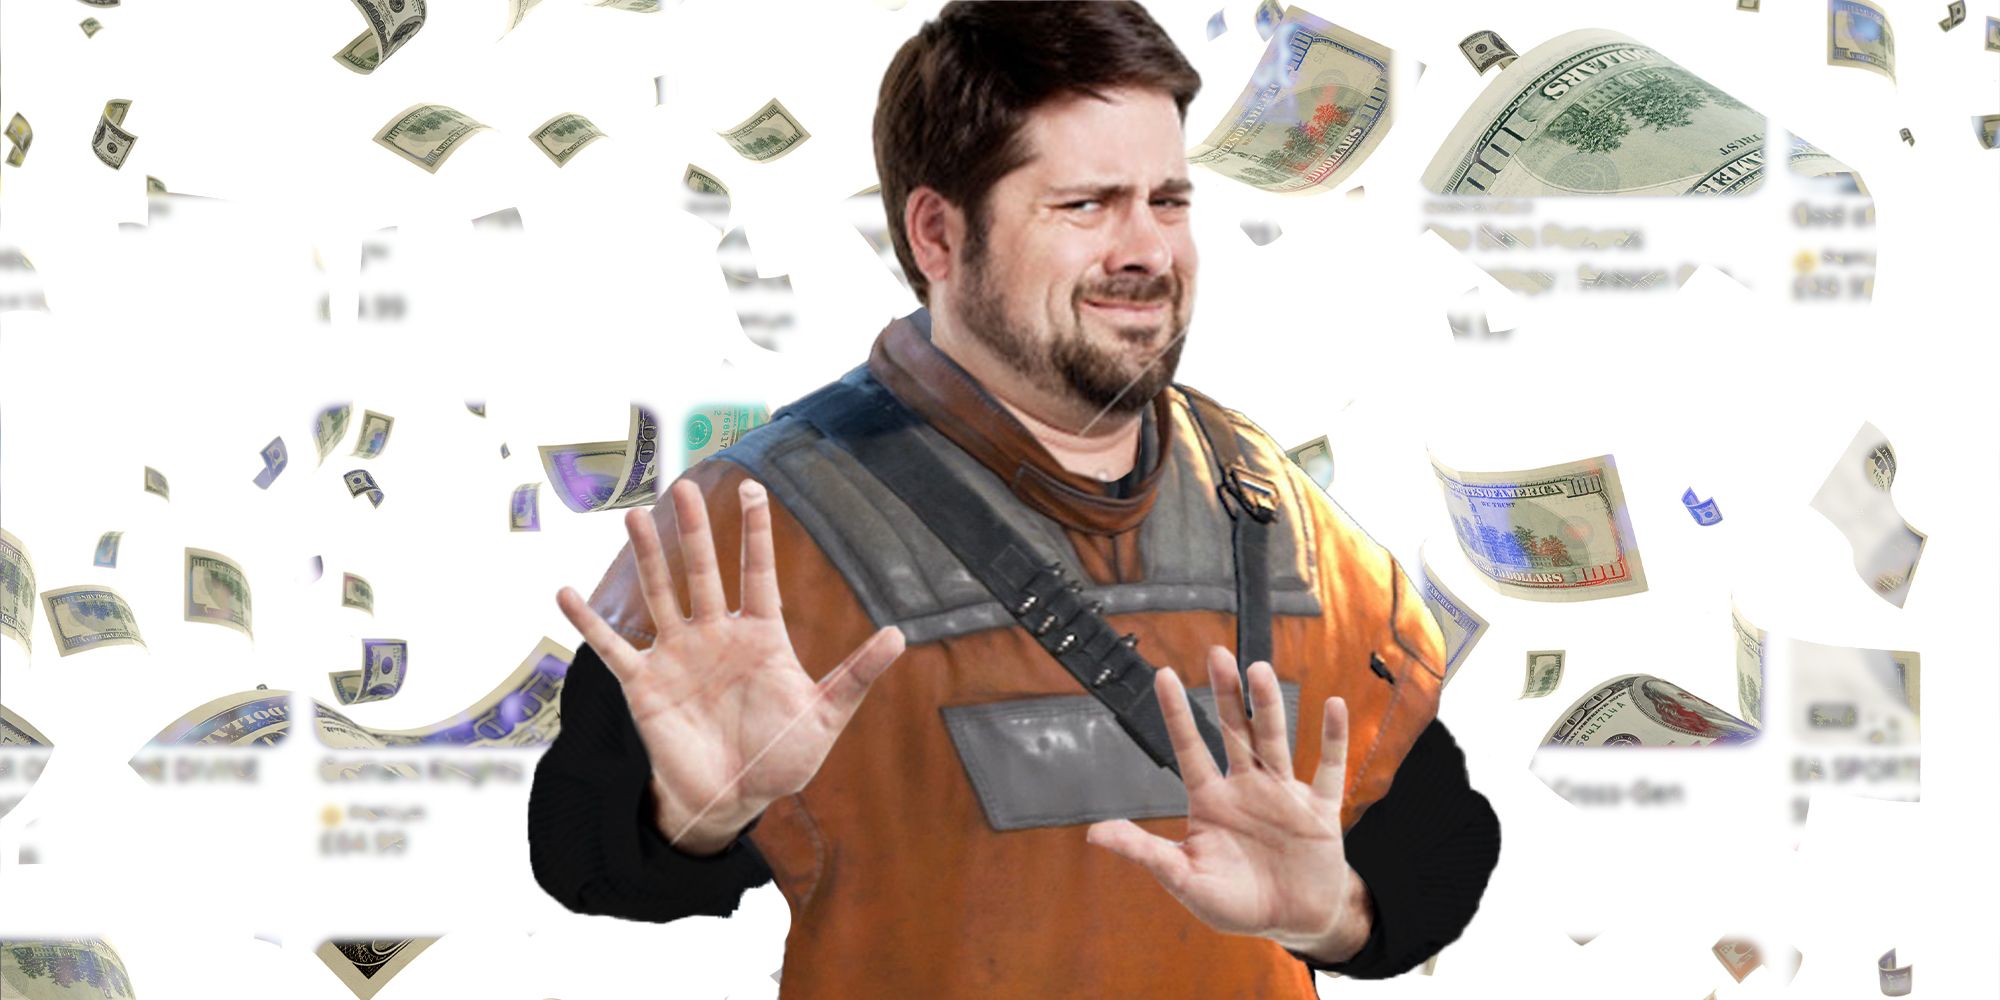 Dismissive guy meme in Cal Kestis' costume with money in the background